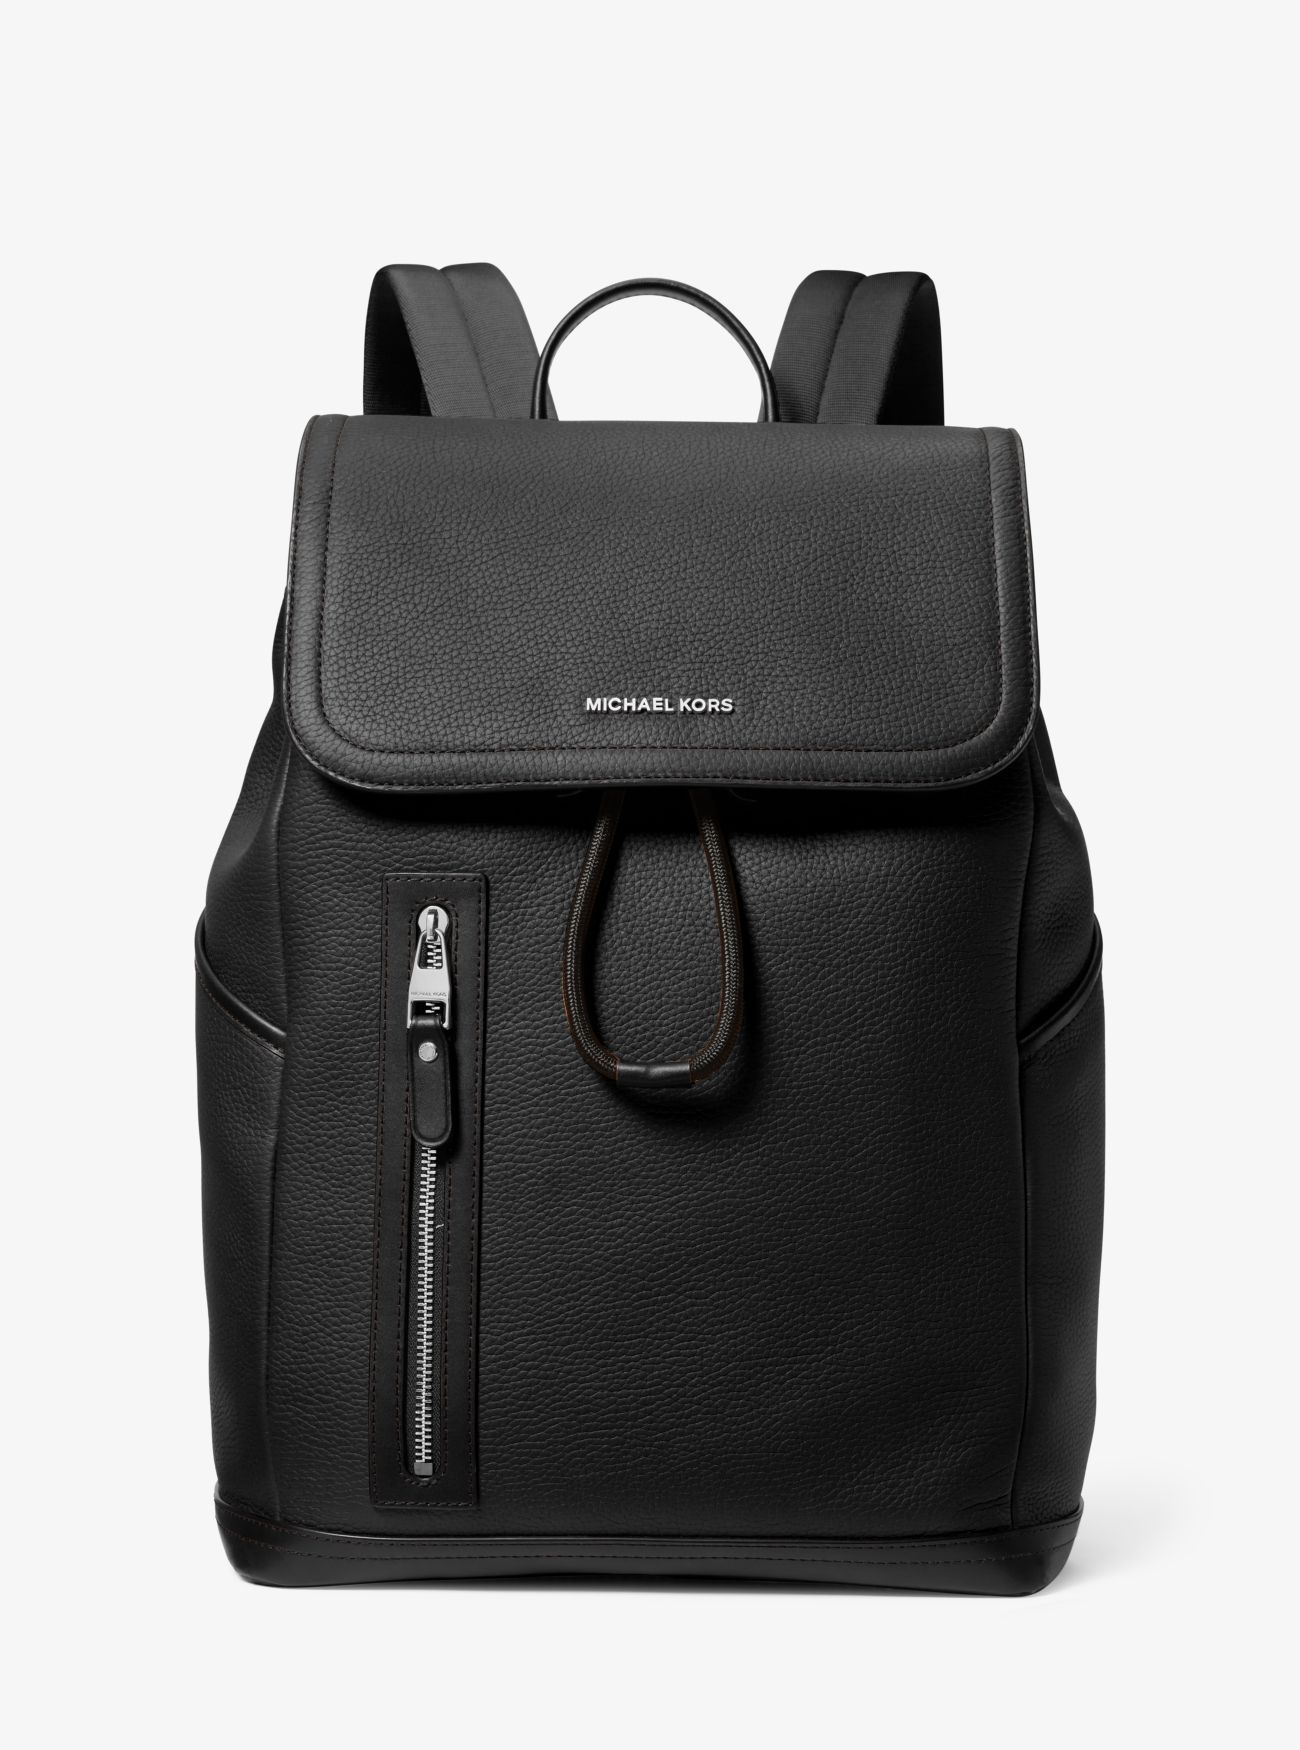 MK Hudson Pebbled Leather Utility Backpack - Black - Michael Kors